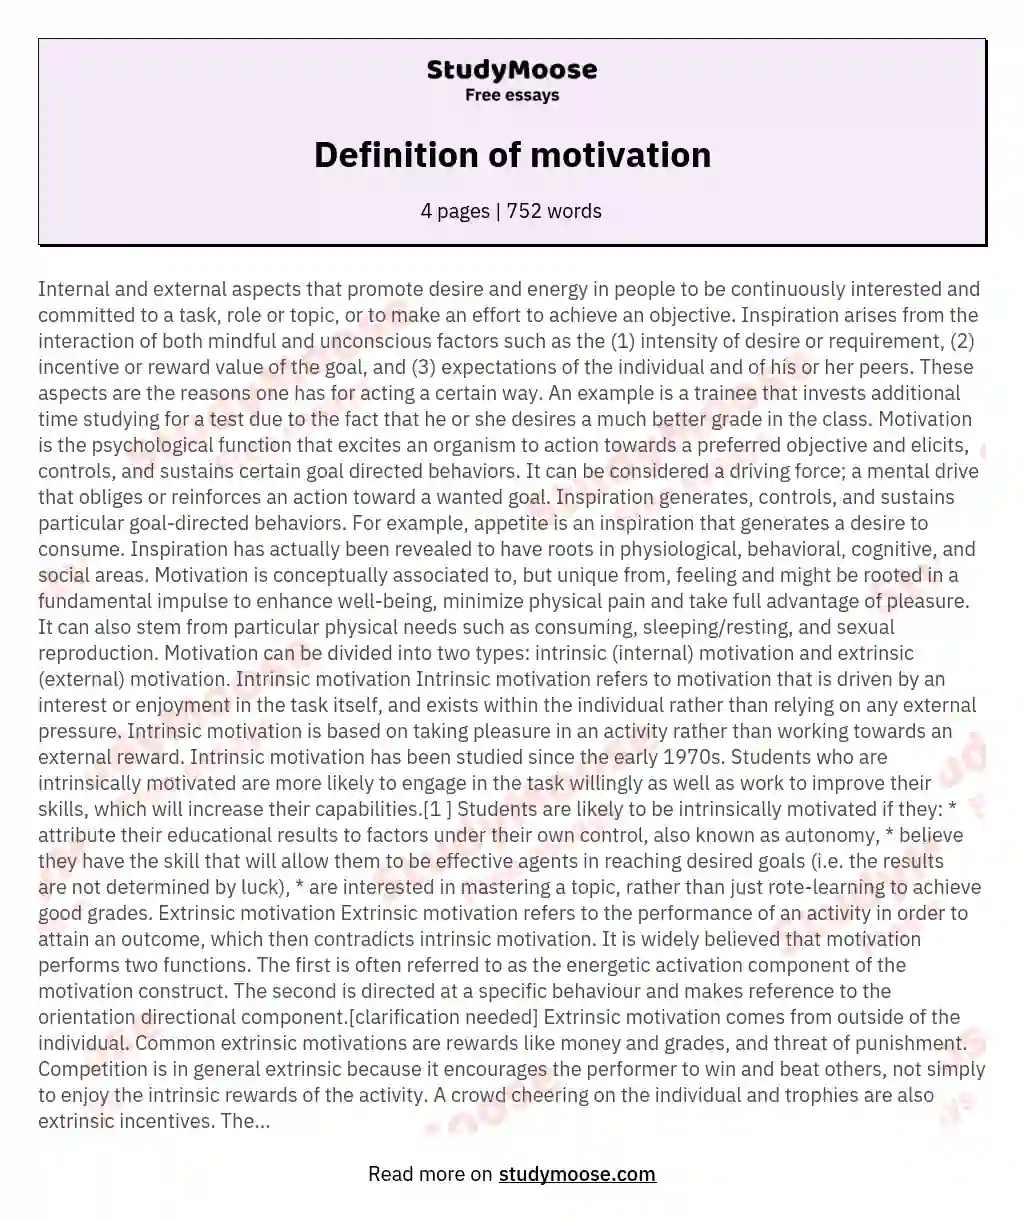 Definition of motivation essay